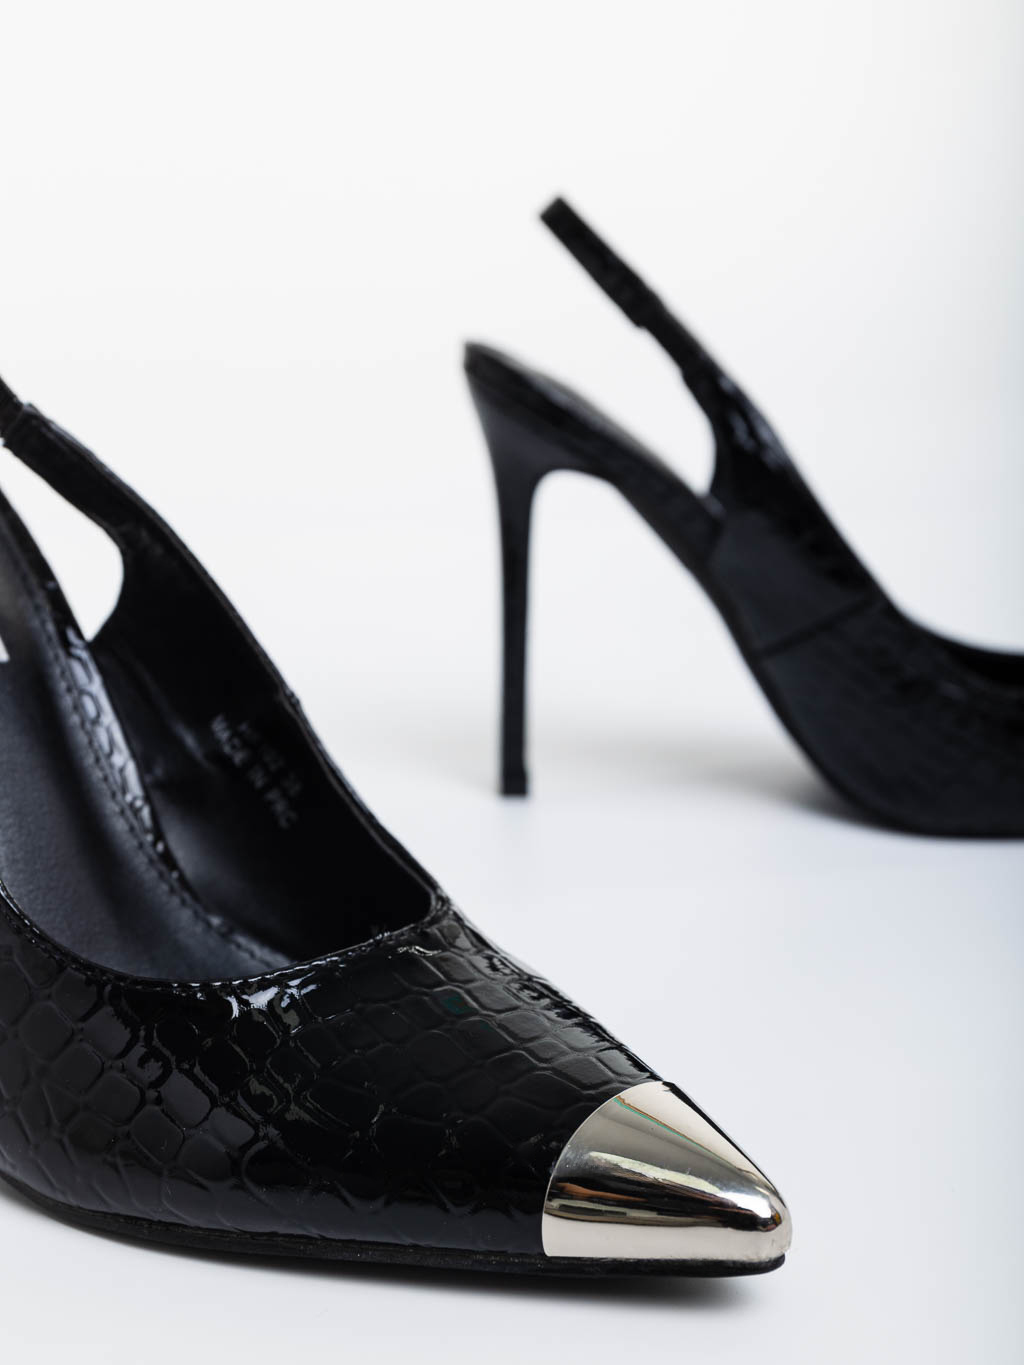 Pantofi dama negri cu toc din piele eclogica lacuita Sheyla, 6 - Kalapod.net